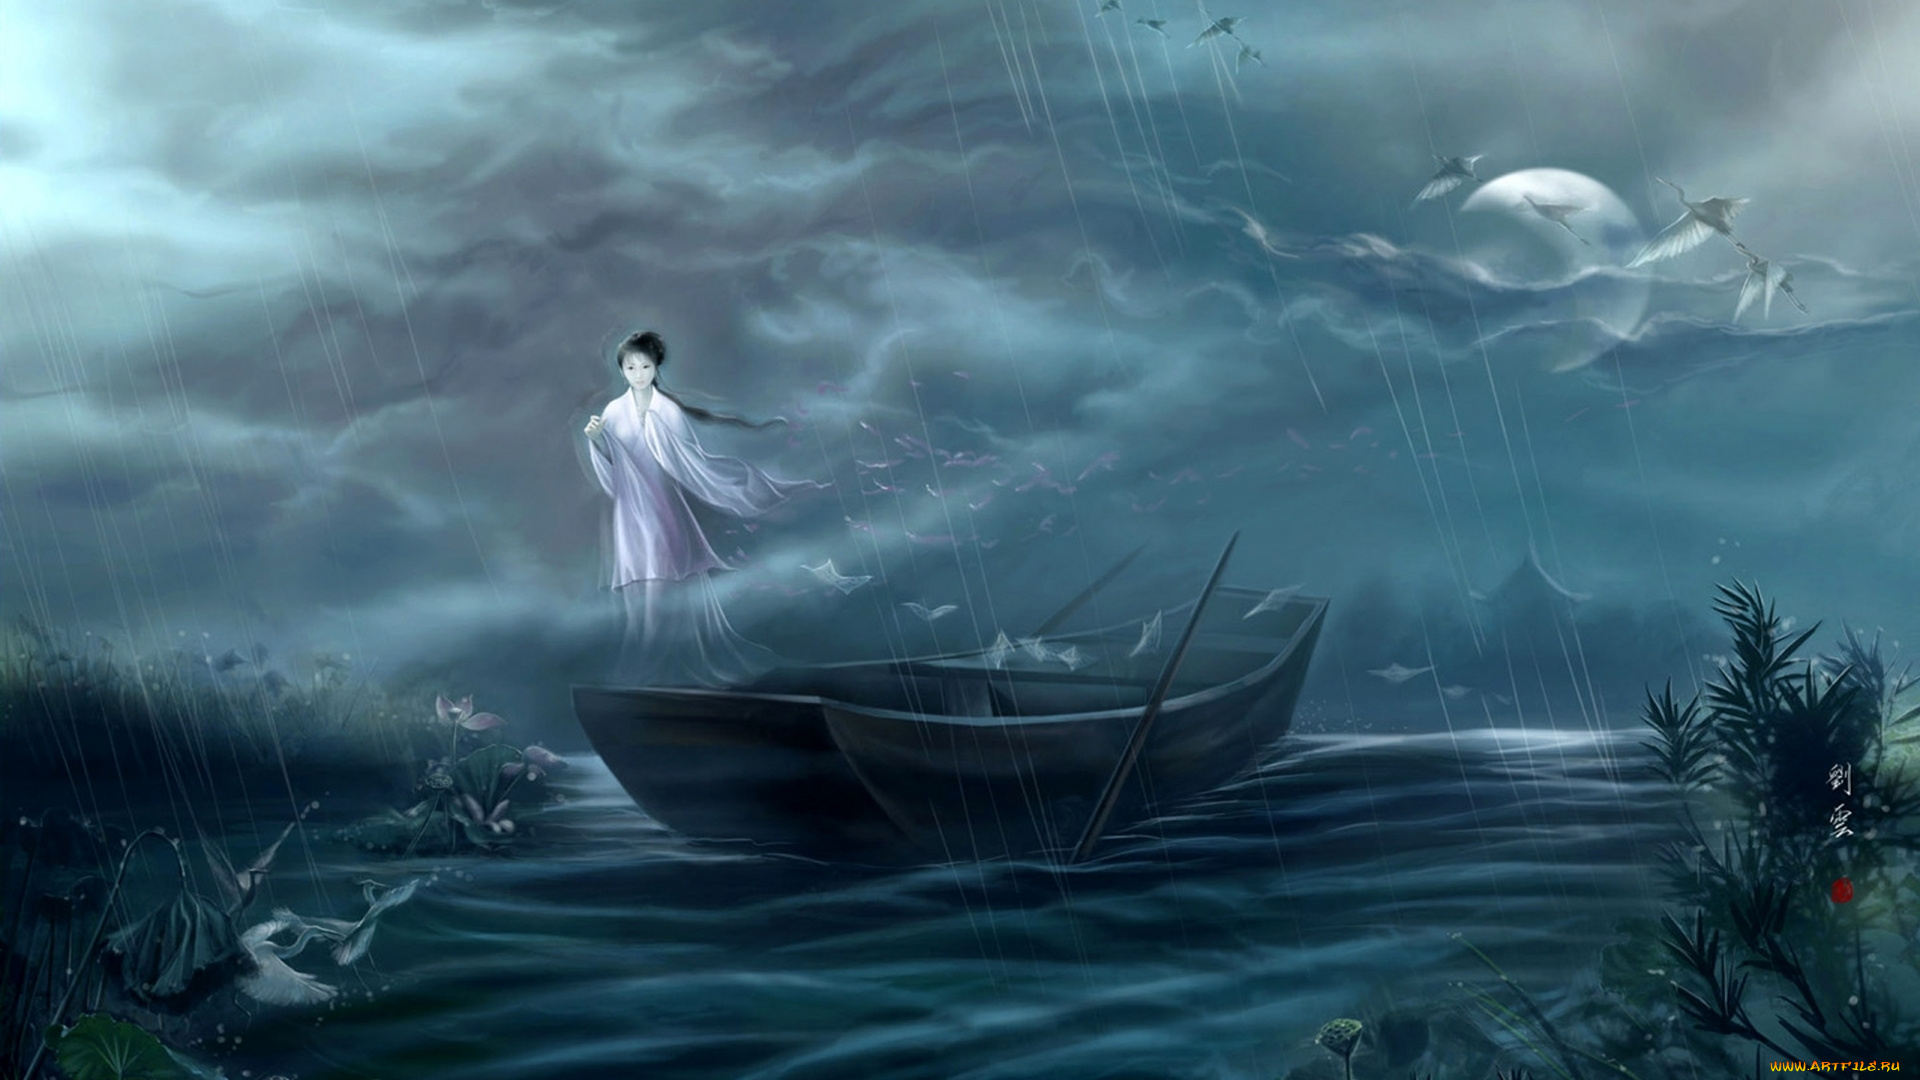 рисованное, живопись, туман, луна, ночь, дом, япония, лодка, журавли, река, дух, девушка, дождь